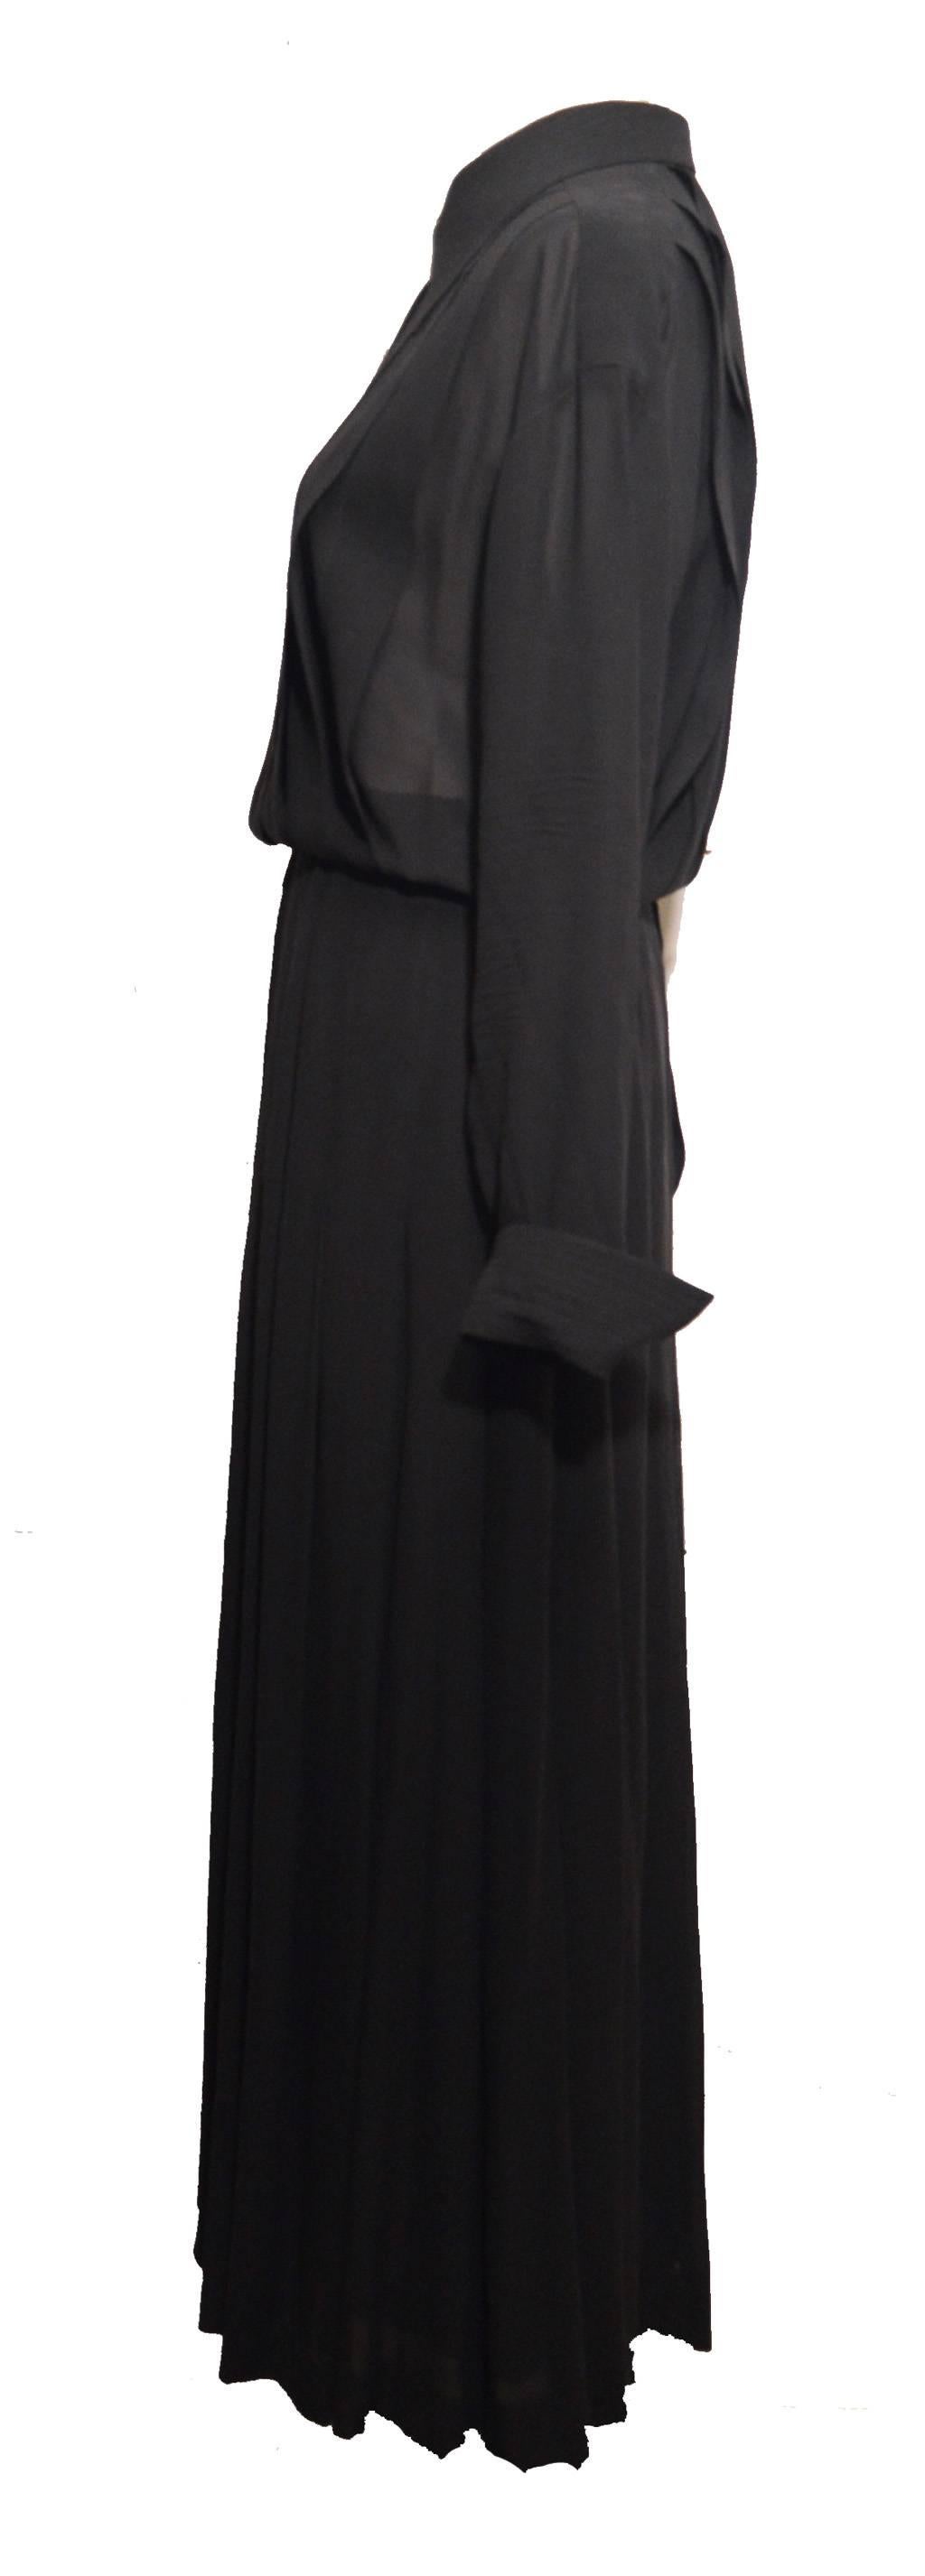 Chanel 1990's Black Sheer Silk Classic Career Dress 52 40 1